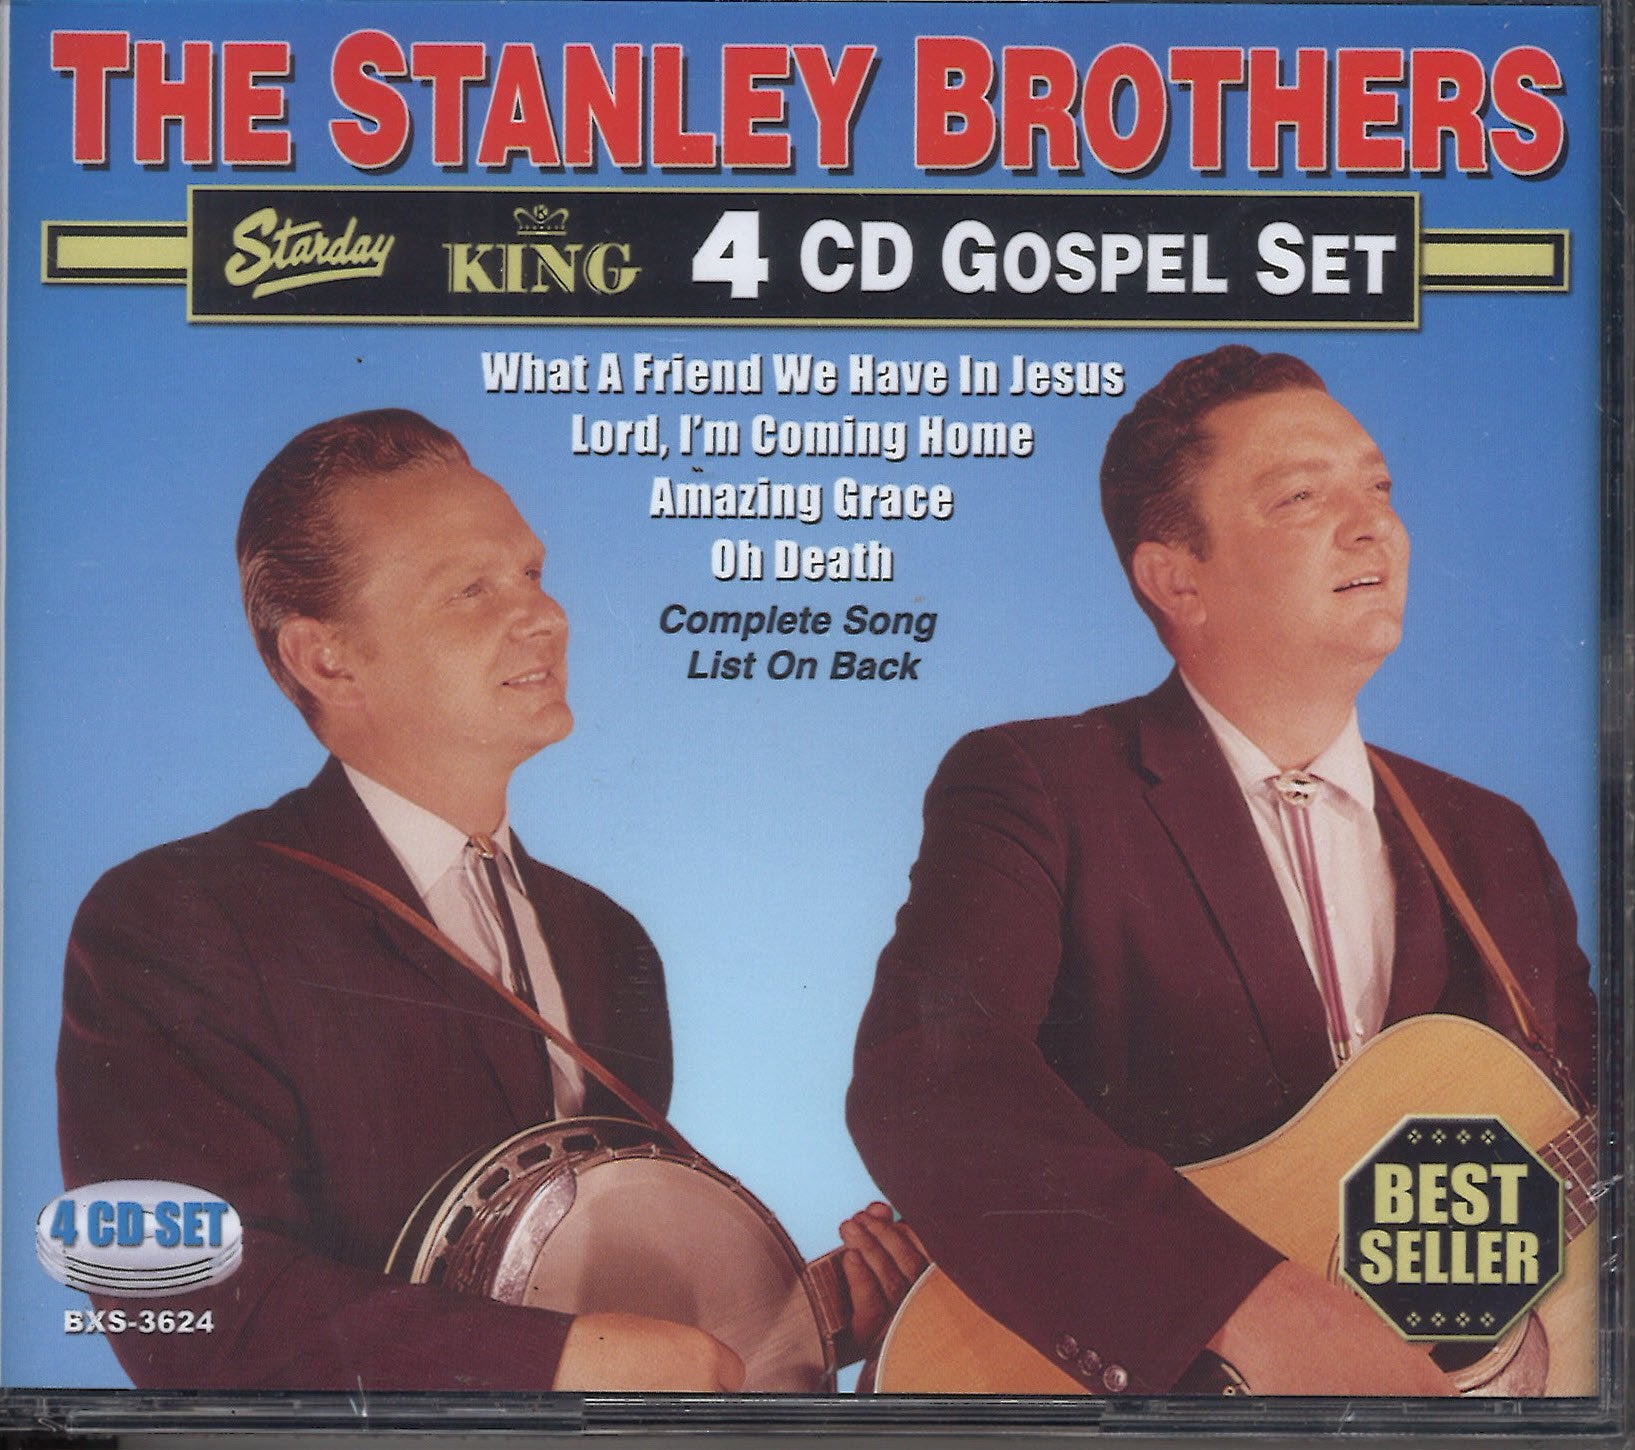 The Stanley Brothers Gospel: 4 CD Set